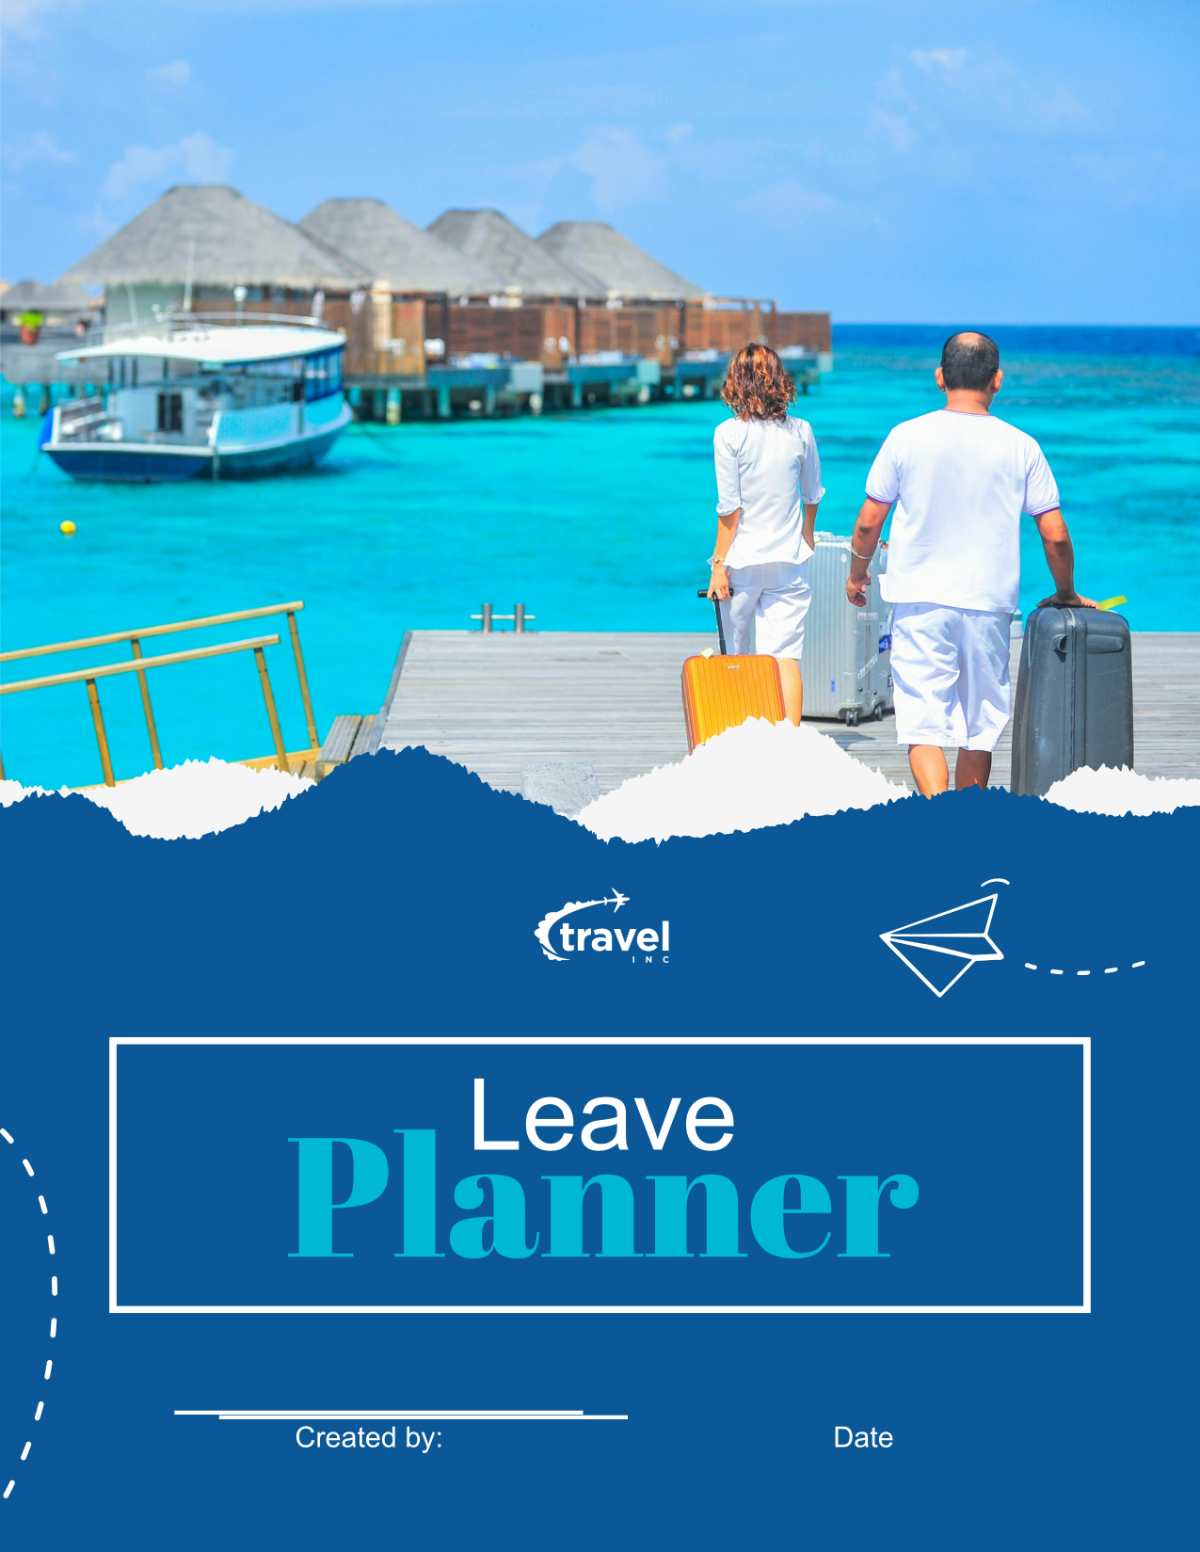 Travel Agency Leave Planner